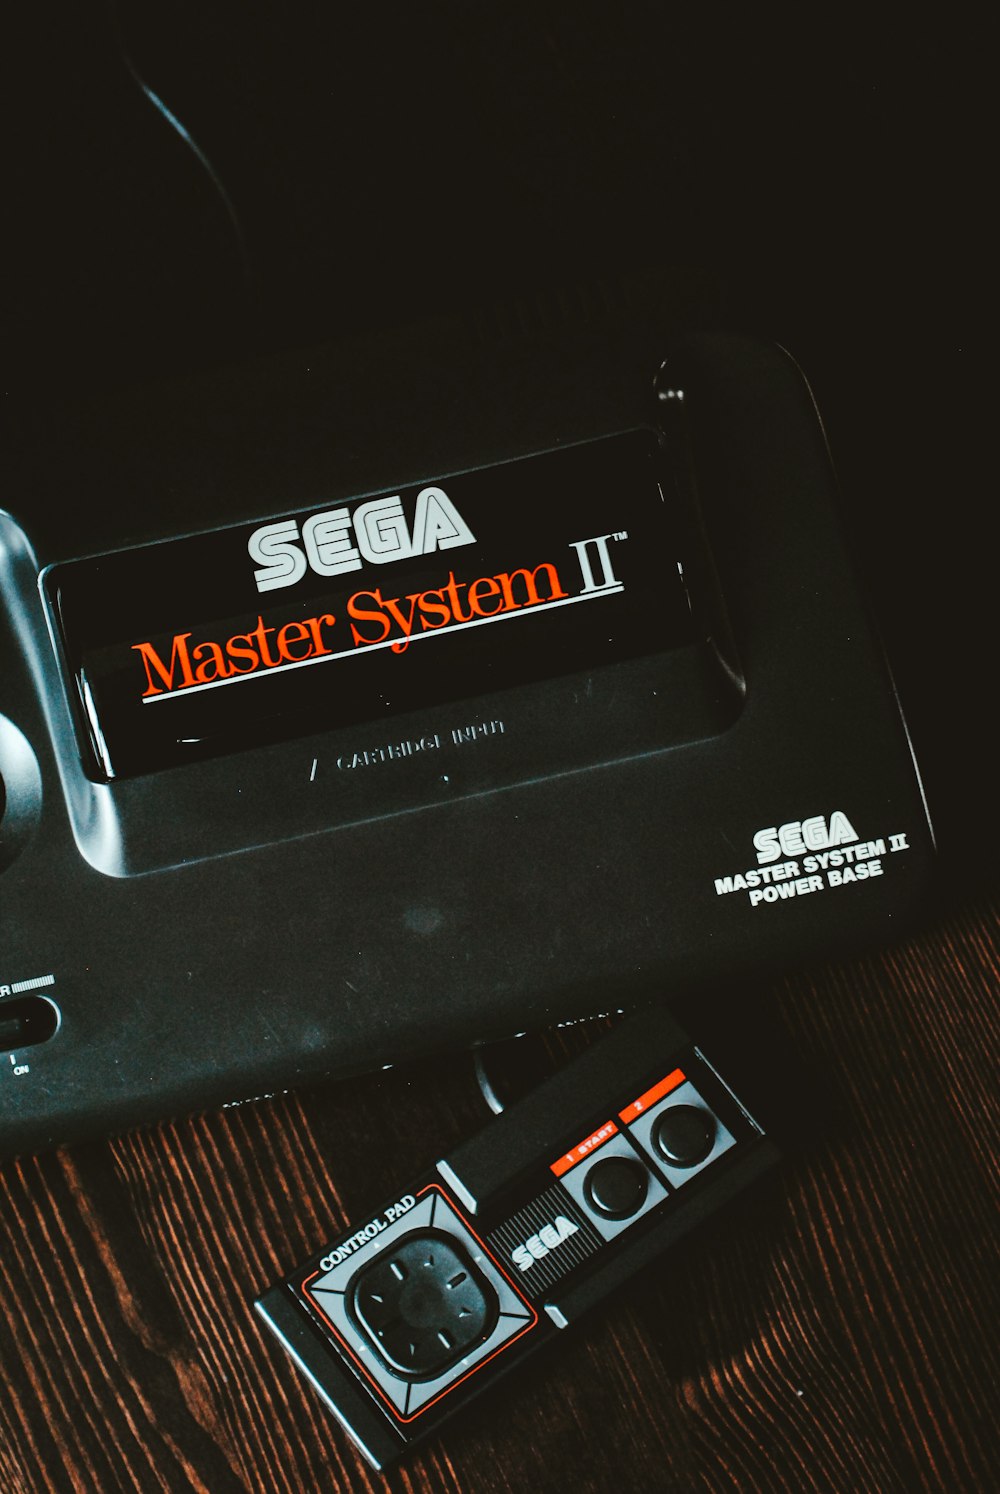 black Sega Master System II device on brown wooden surface